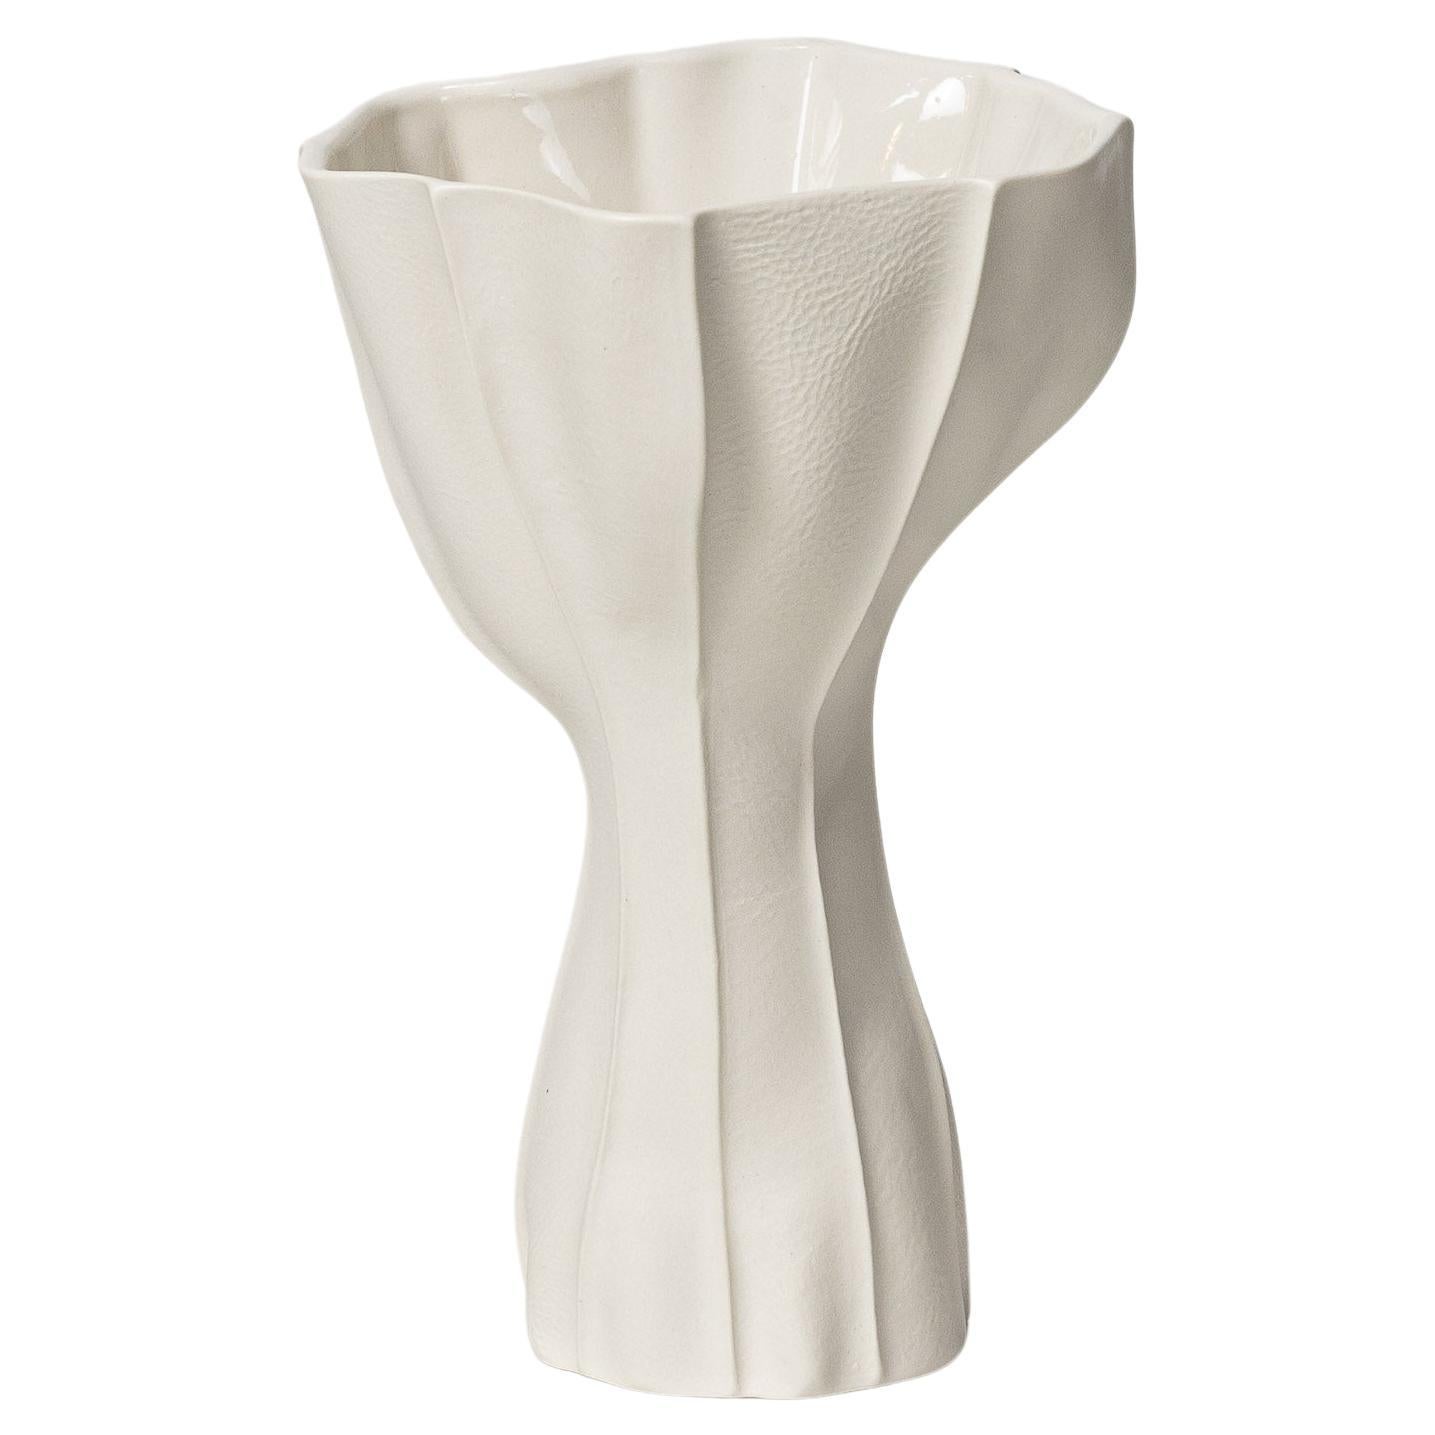 En stock, Organic Ceramic Kawa Vase 9.1, White, Textured, Sculptural, Porcelain  en vente